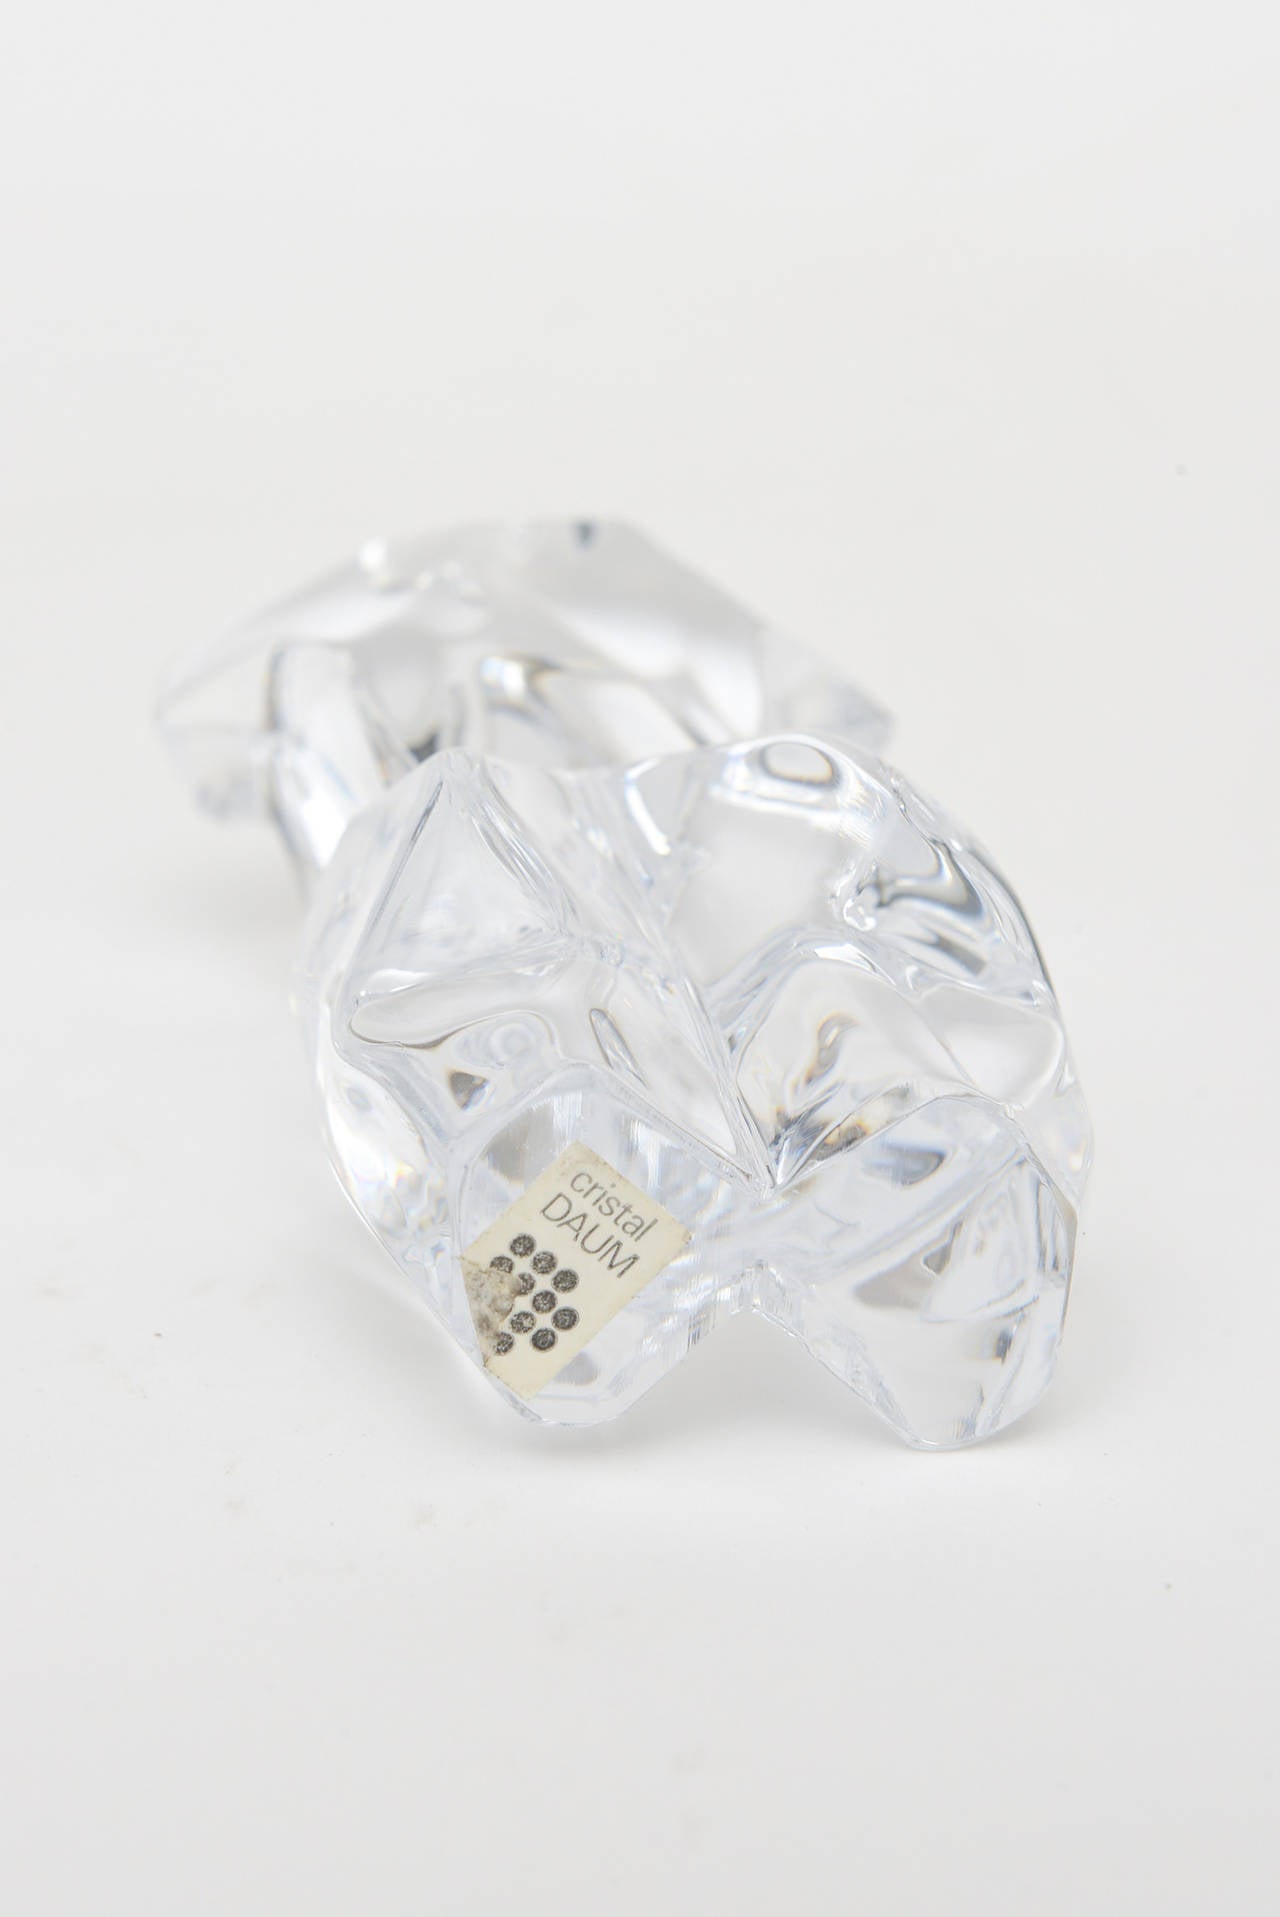 French Daum Crystal Glass Cubist Torso Sculpture 2